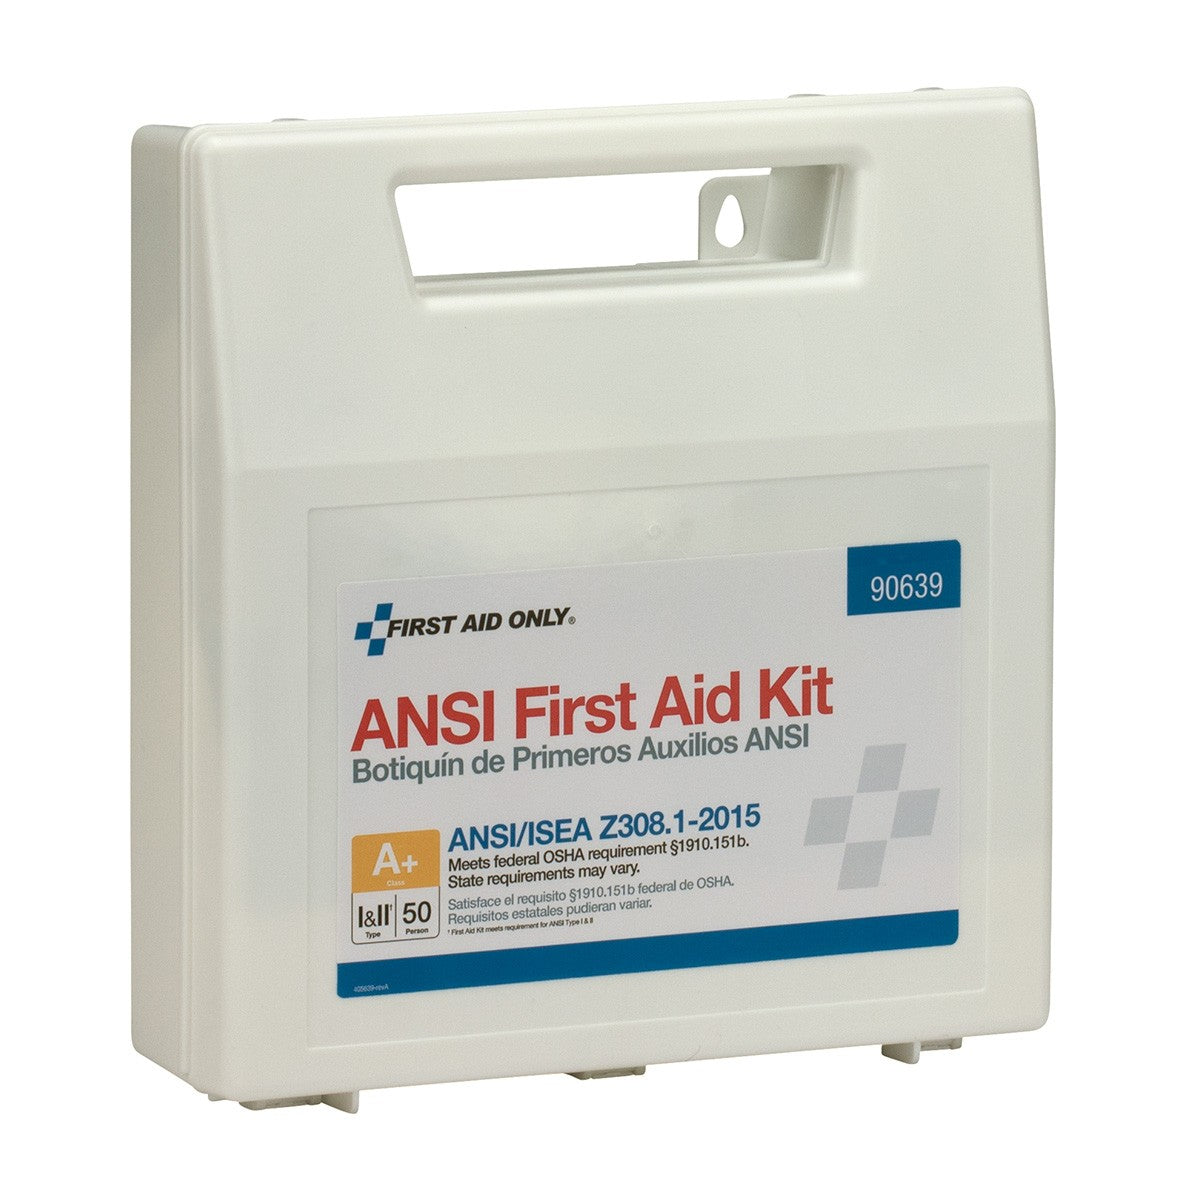 50 Person Bulk Plastic First Aid Kit, ANSI Compliant - W-90639